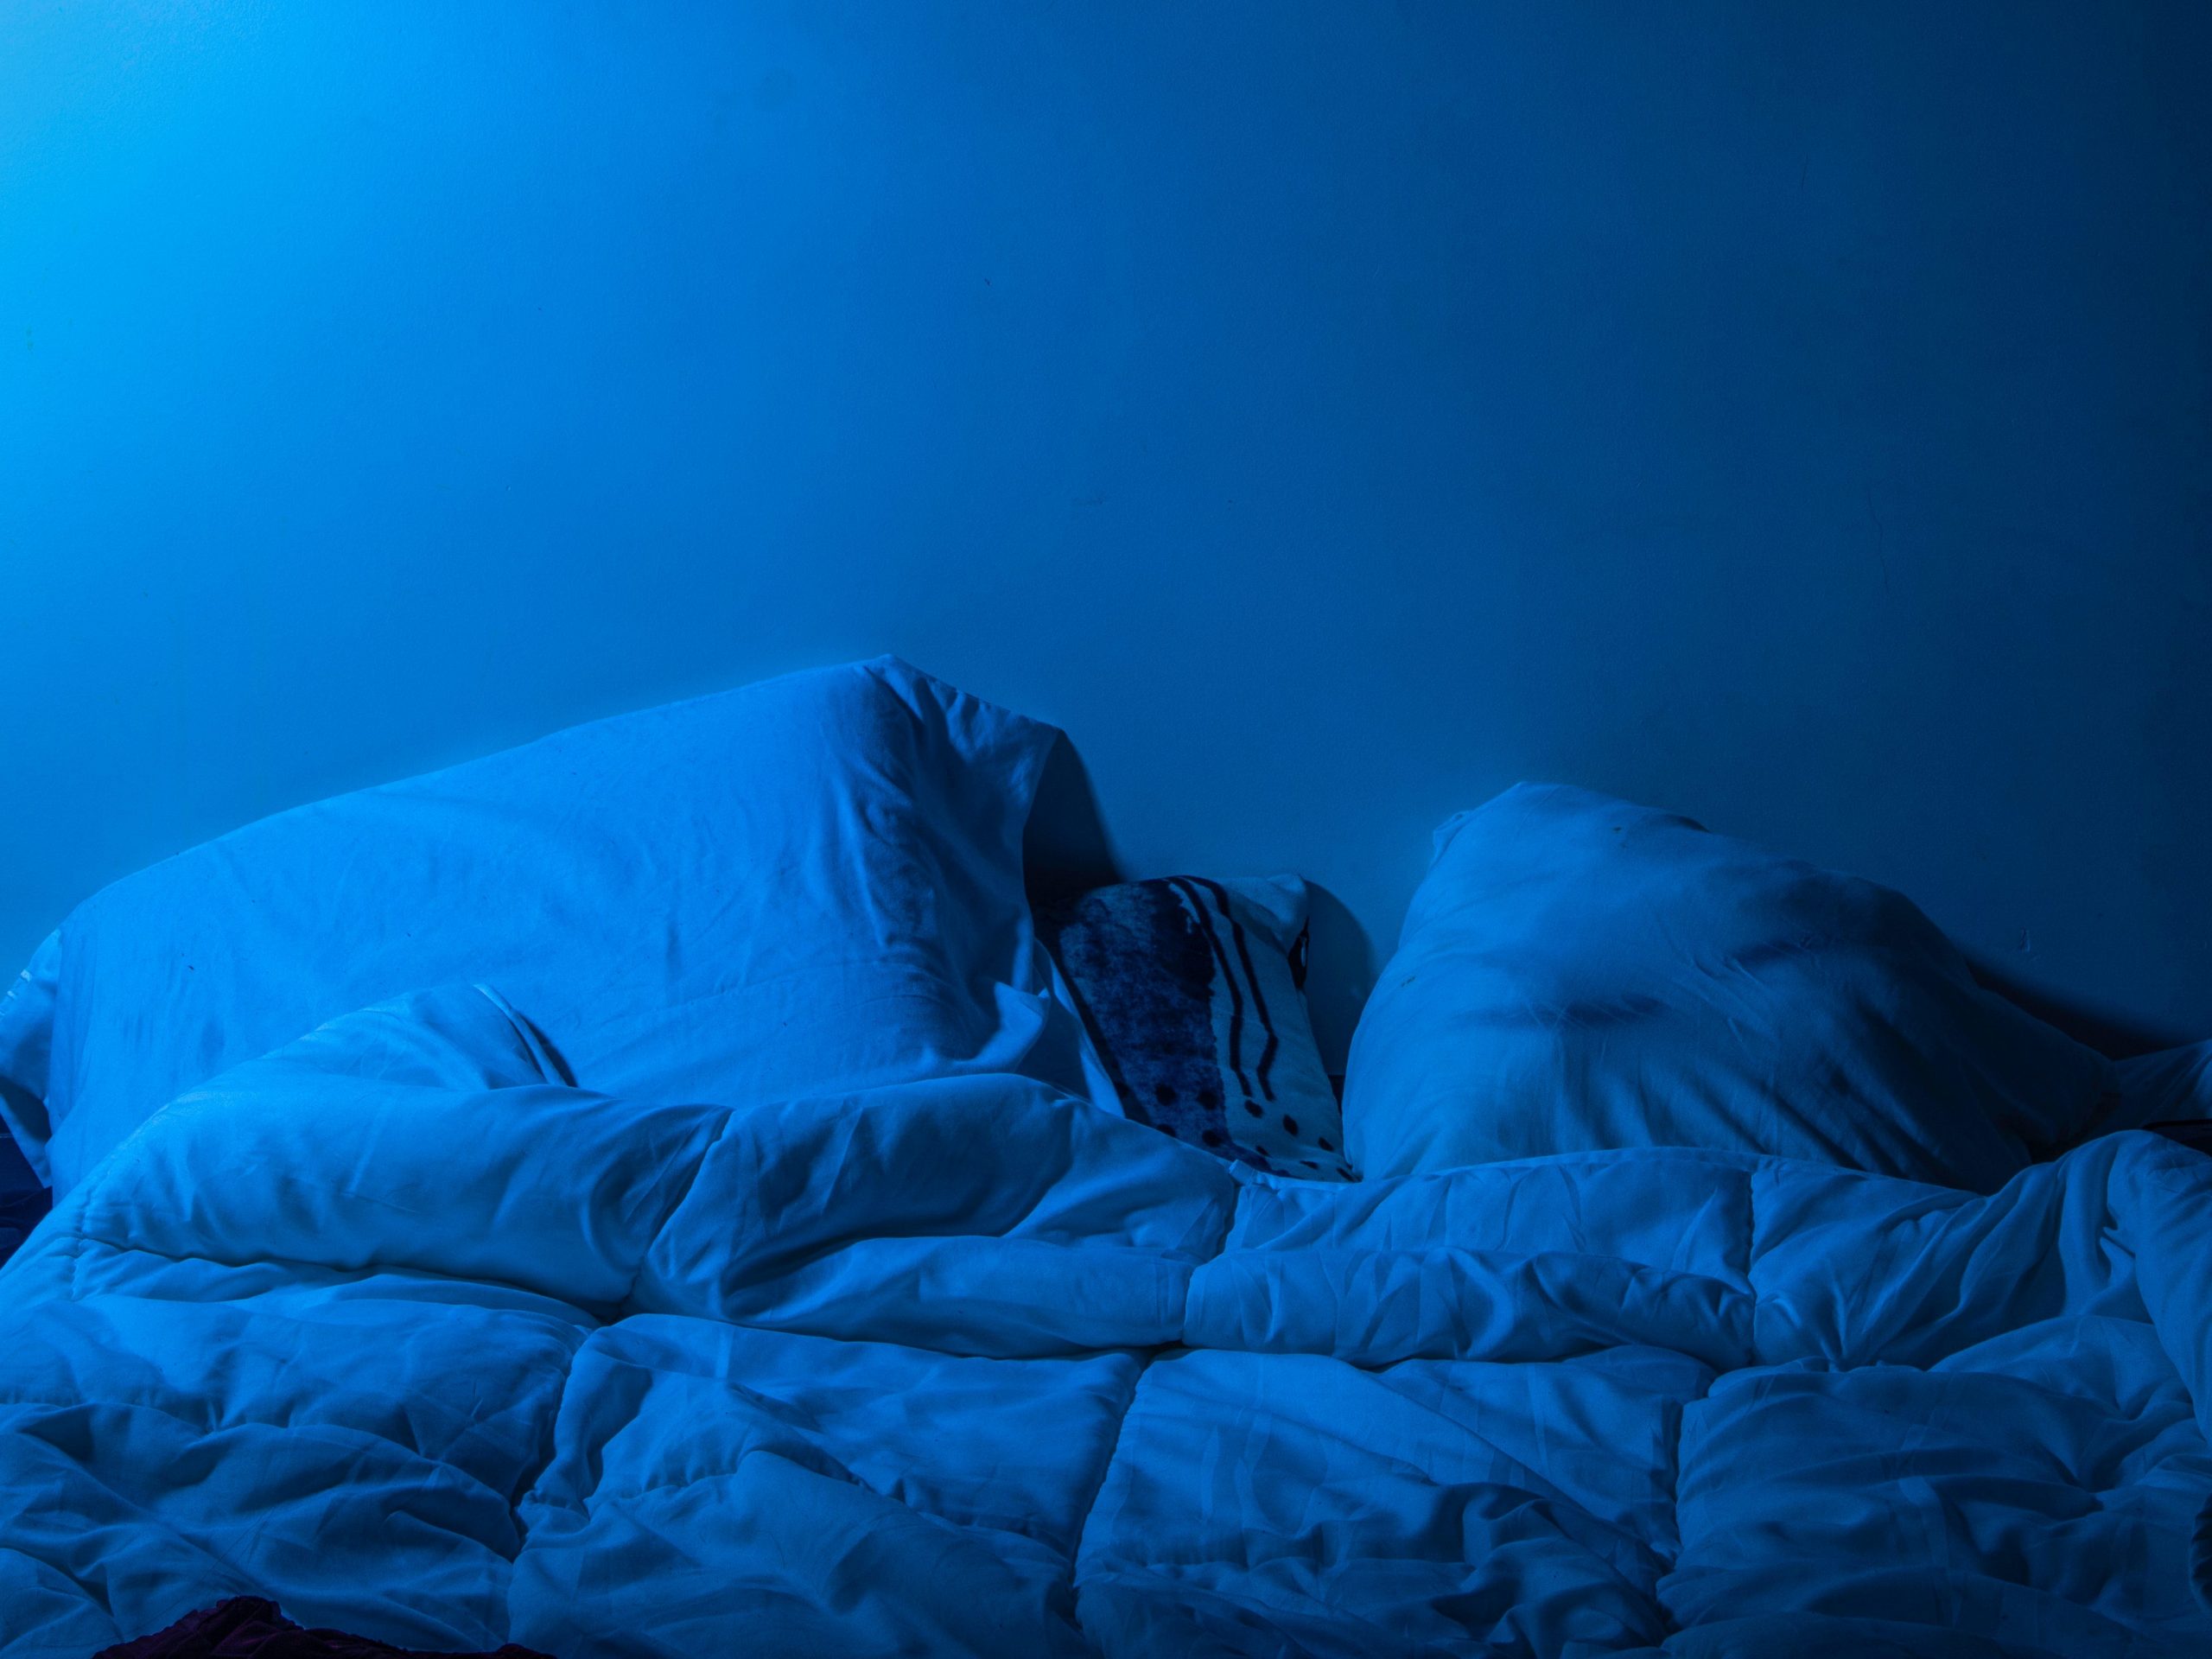 sleep paralysis insomnia disorder apnea narcolepsy night dream nightmare bed awake cox 2